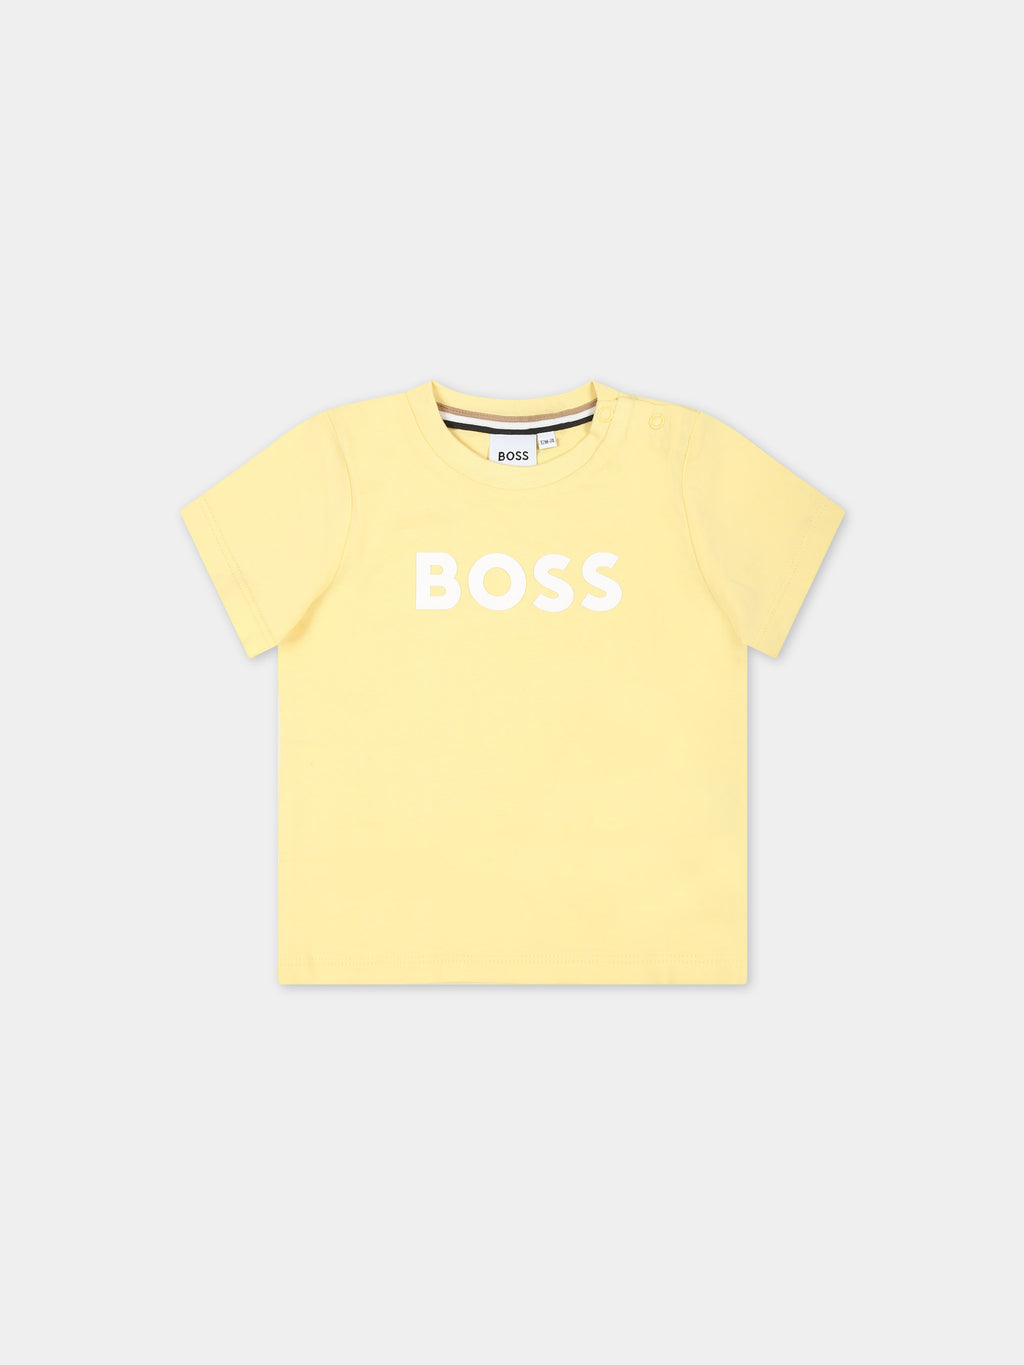 T-shirt jaune pour bébé garçon avec logo